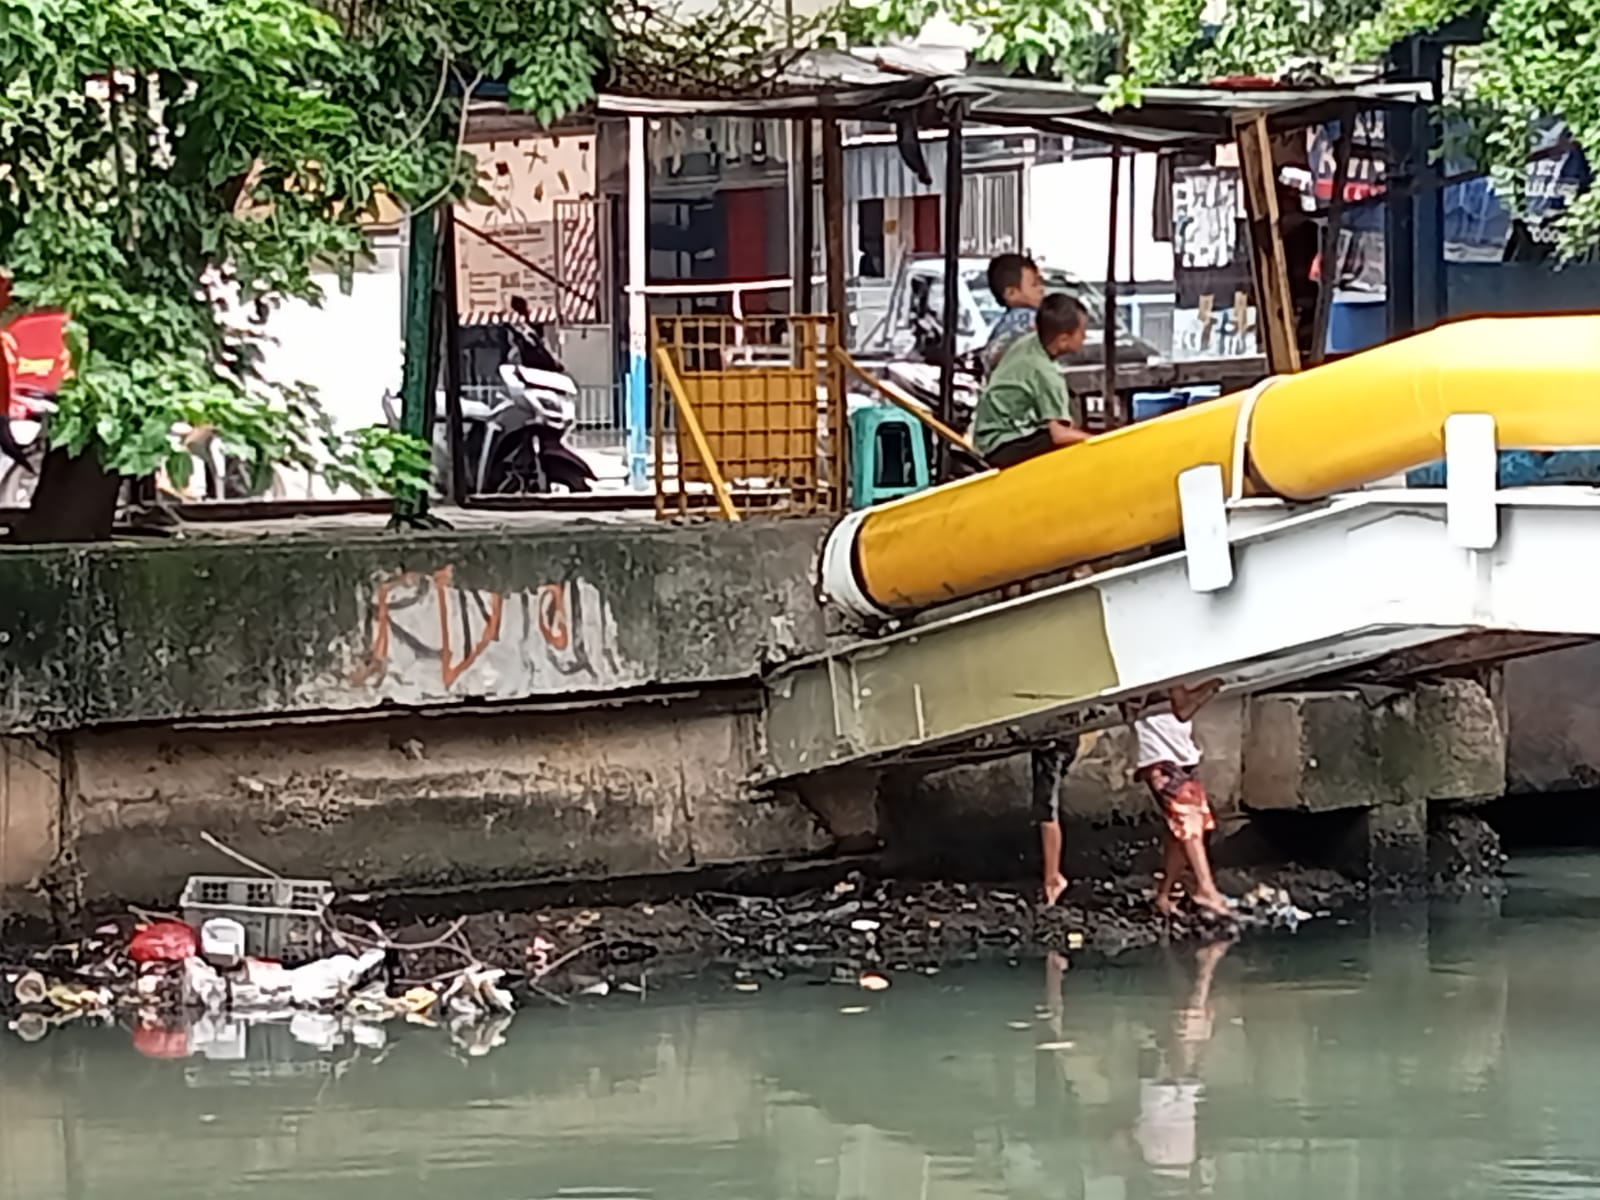 Beberapa anak kecil bermain di bantaran Sungai Angke teluk Gong, Penjaringan, Jakarta Utara tanpa takut, anak-anak tersebut memacing ikan di sungai berbau menyengat (DP.Sari/Prohealth,id)